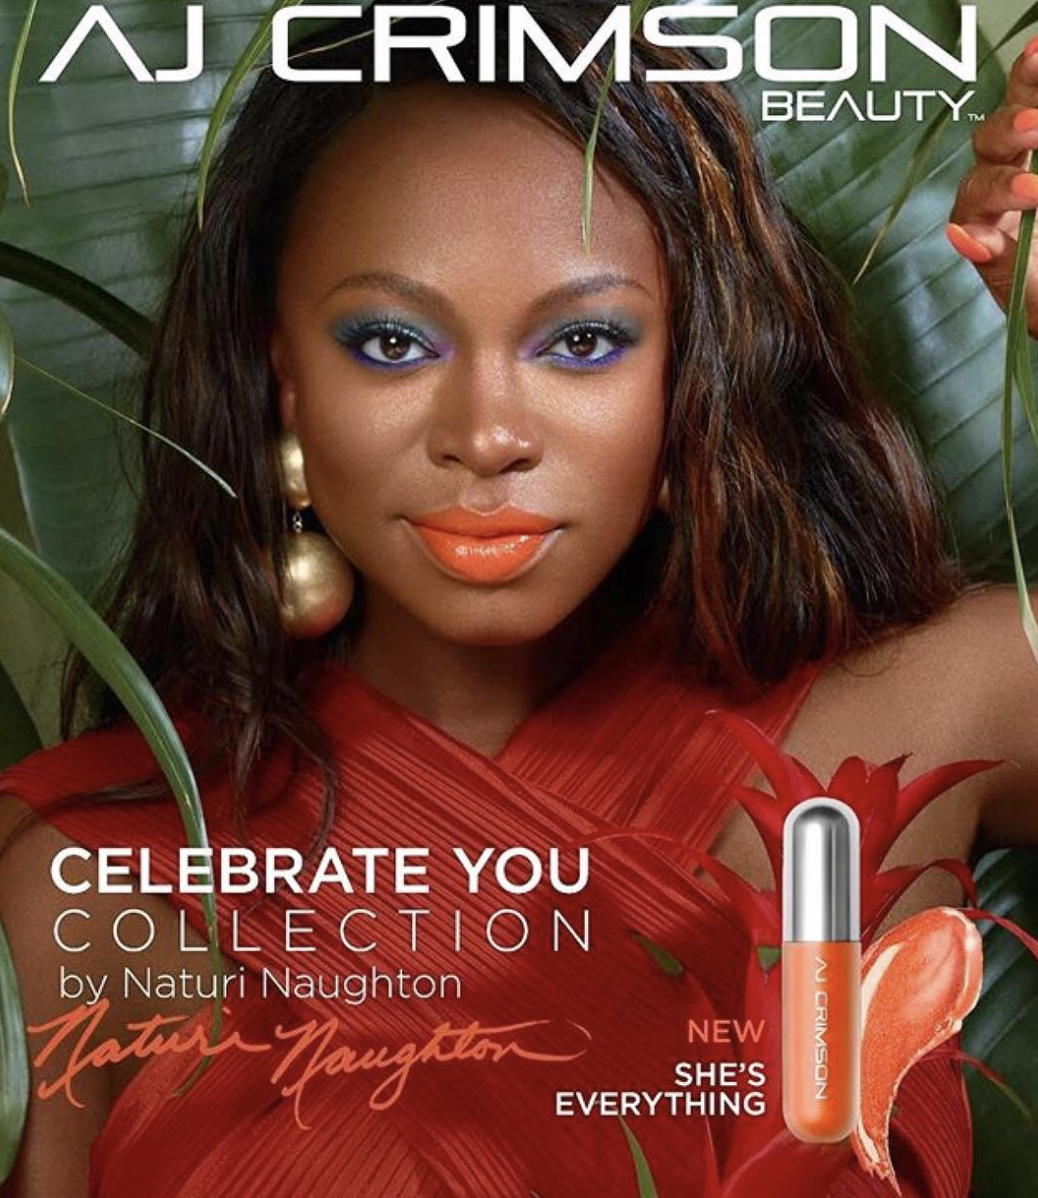 AJ Crimson Beauty Ad Example